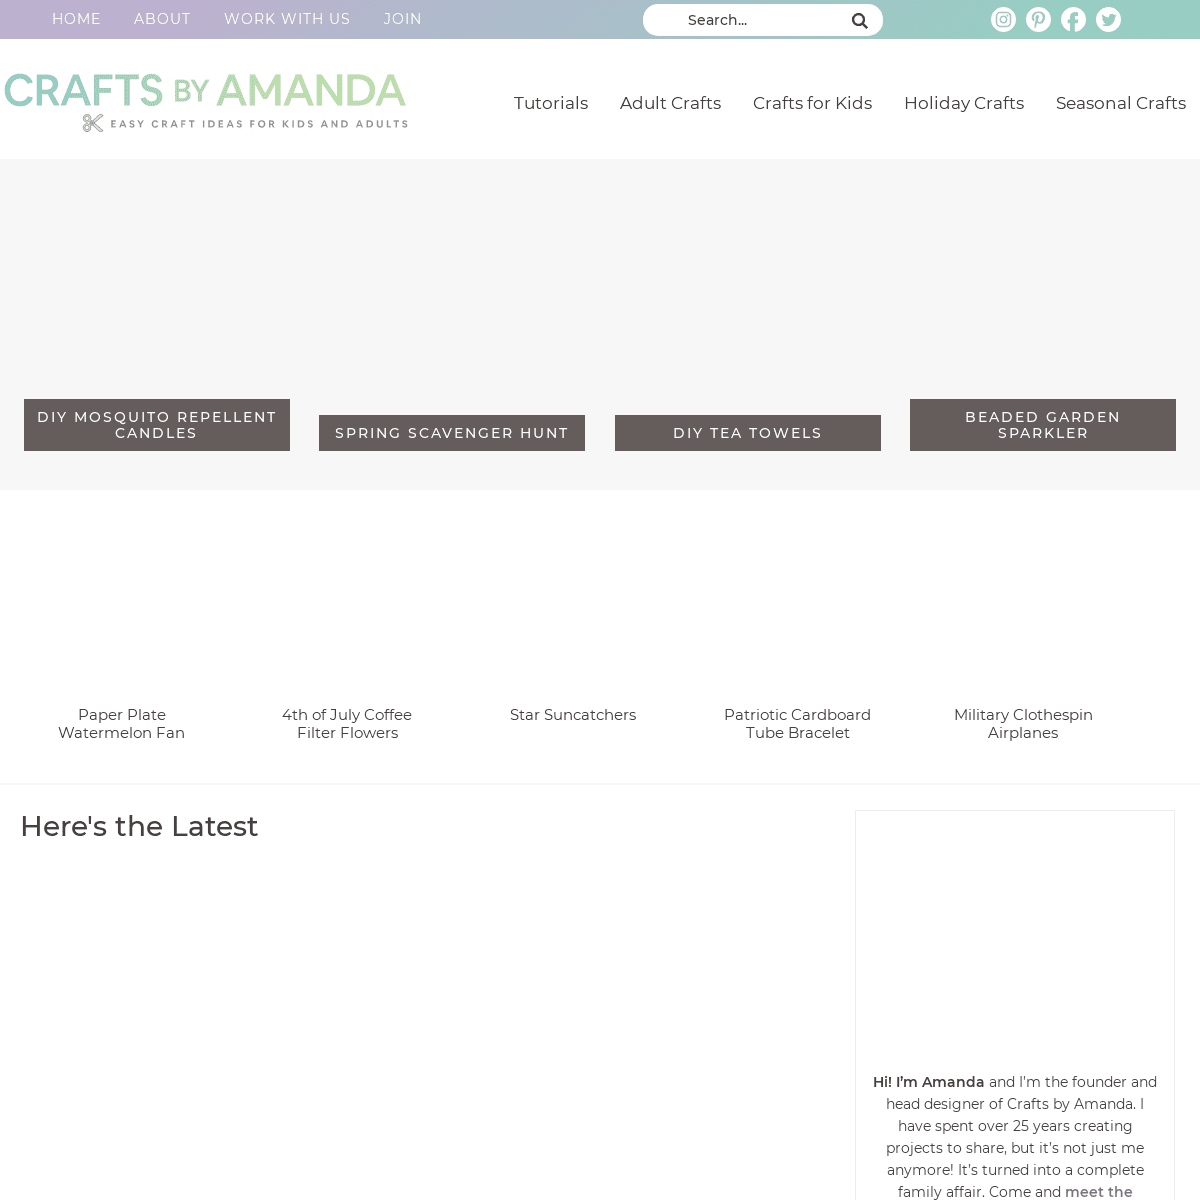 A complete backup of https://craftsbyamanda.com